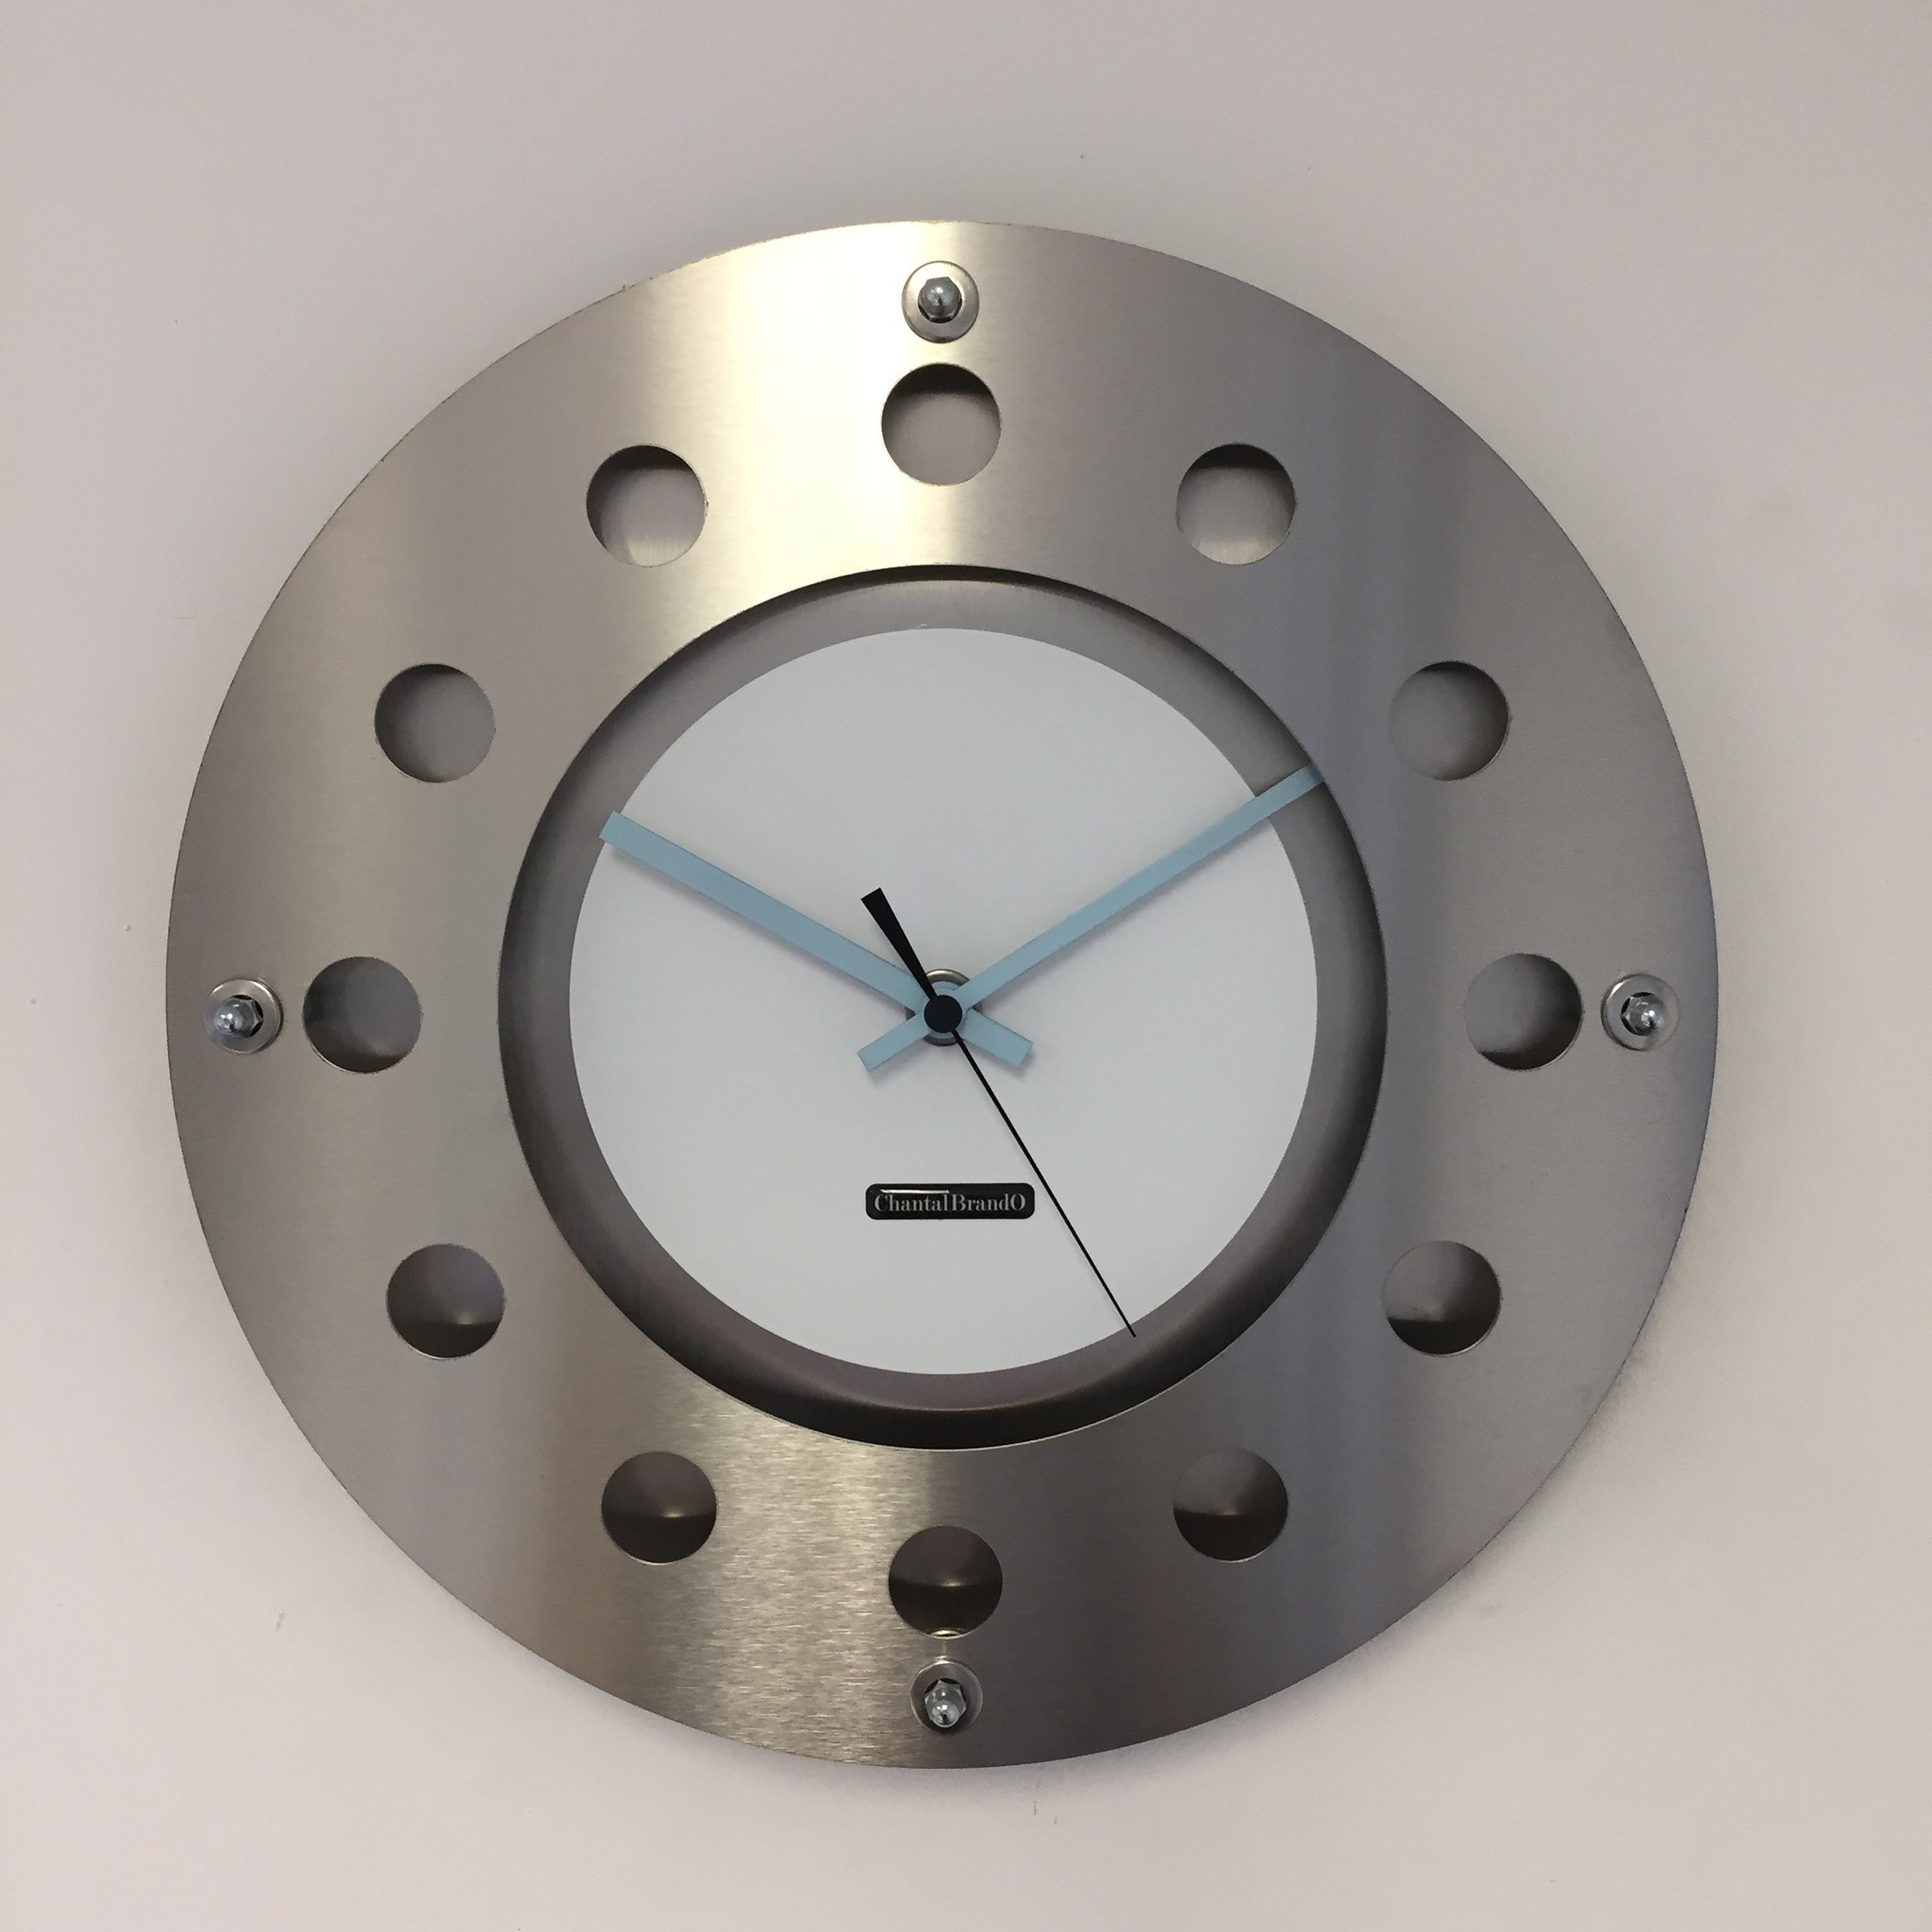 ChantalBrandO Design - wall clock mecanica small indoor circle white blue black modern Dutch design handmade 40 cm